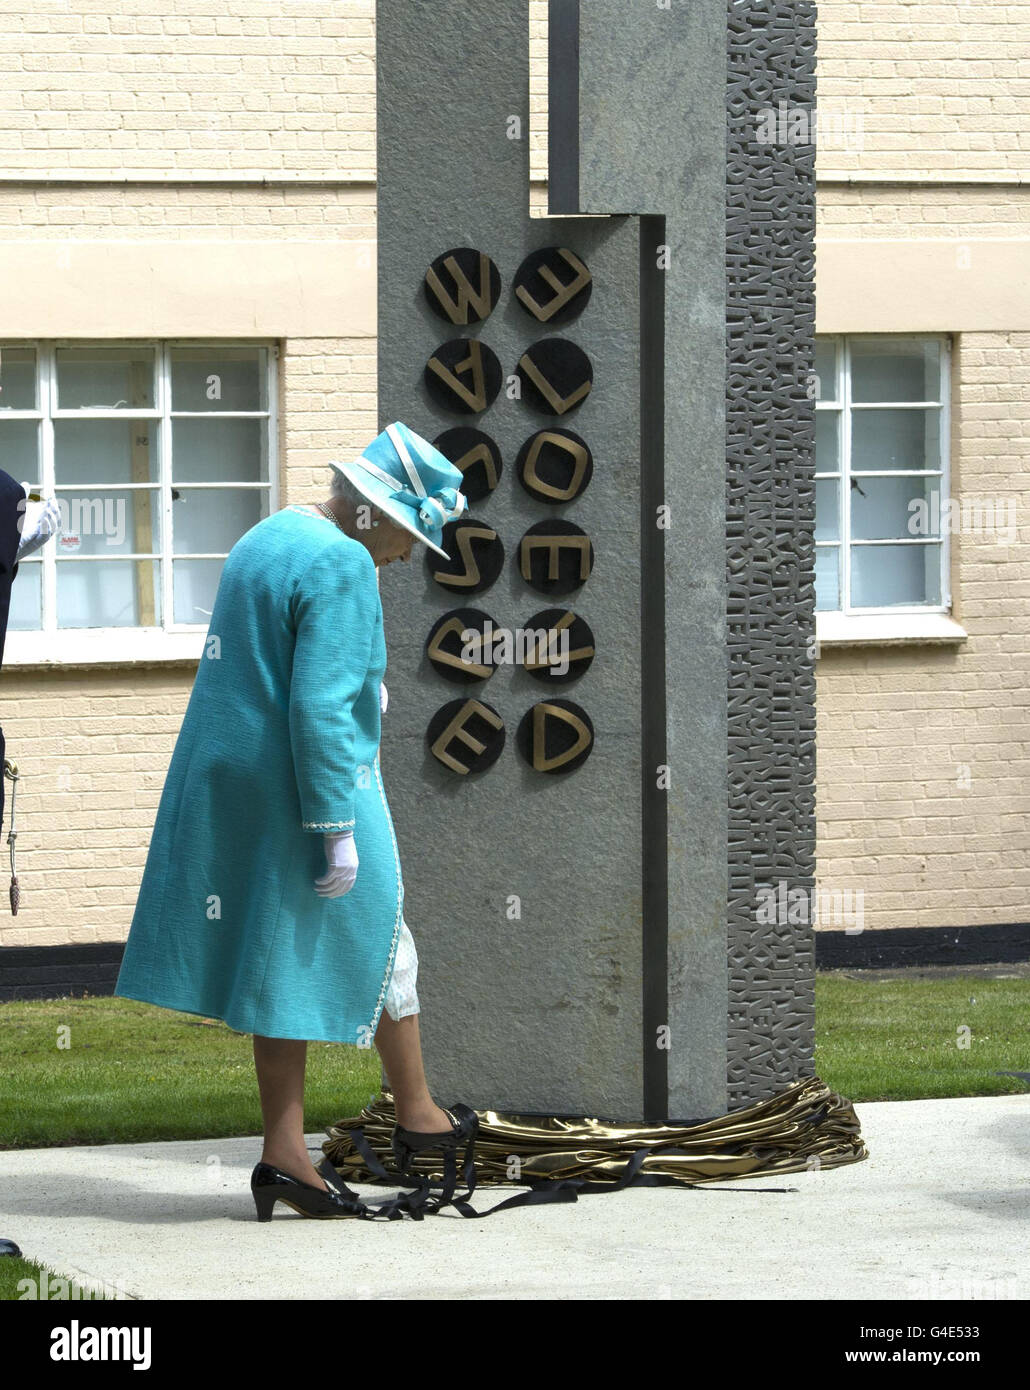 La regina Elisabetta II svela un memoriale di 8 piedi che porta la parola "We also served" durante una visita a Bletchley Park, Milton Keynes. Foto Stock